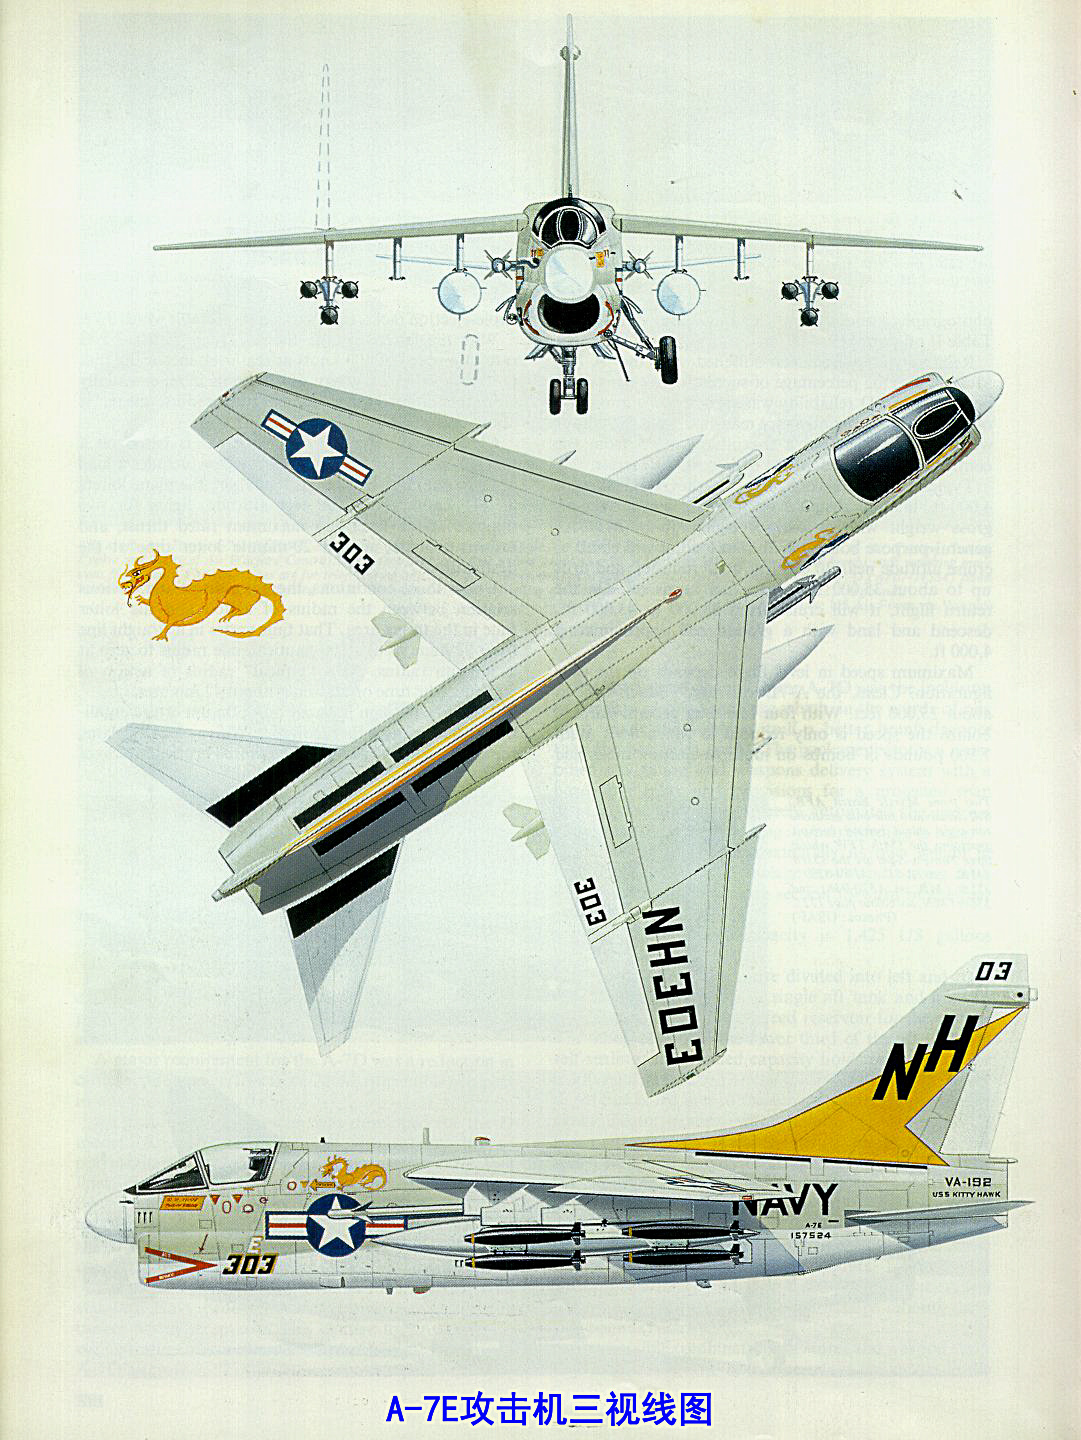 A-7E攻擊機三視線圖